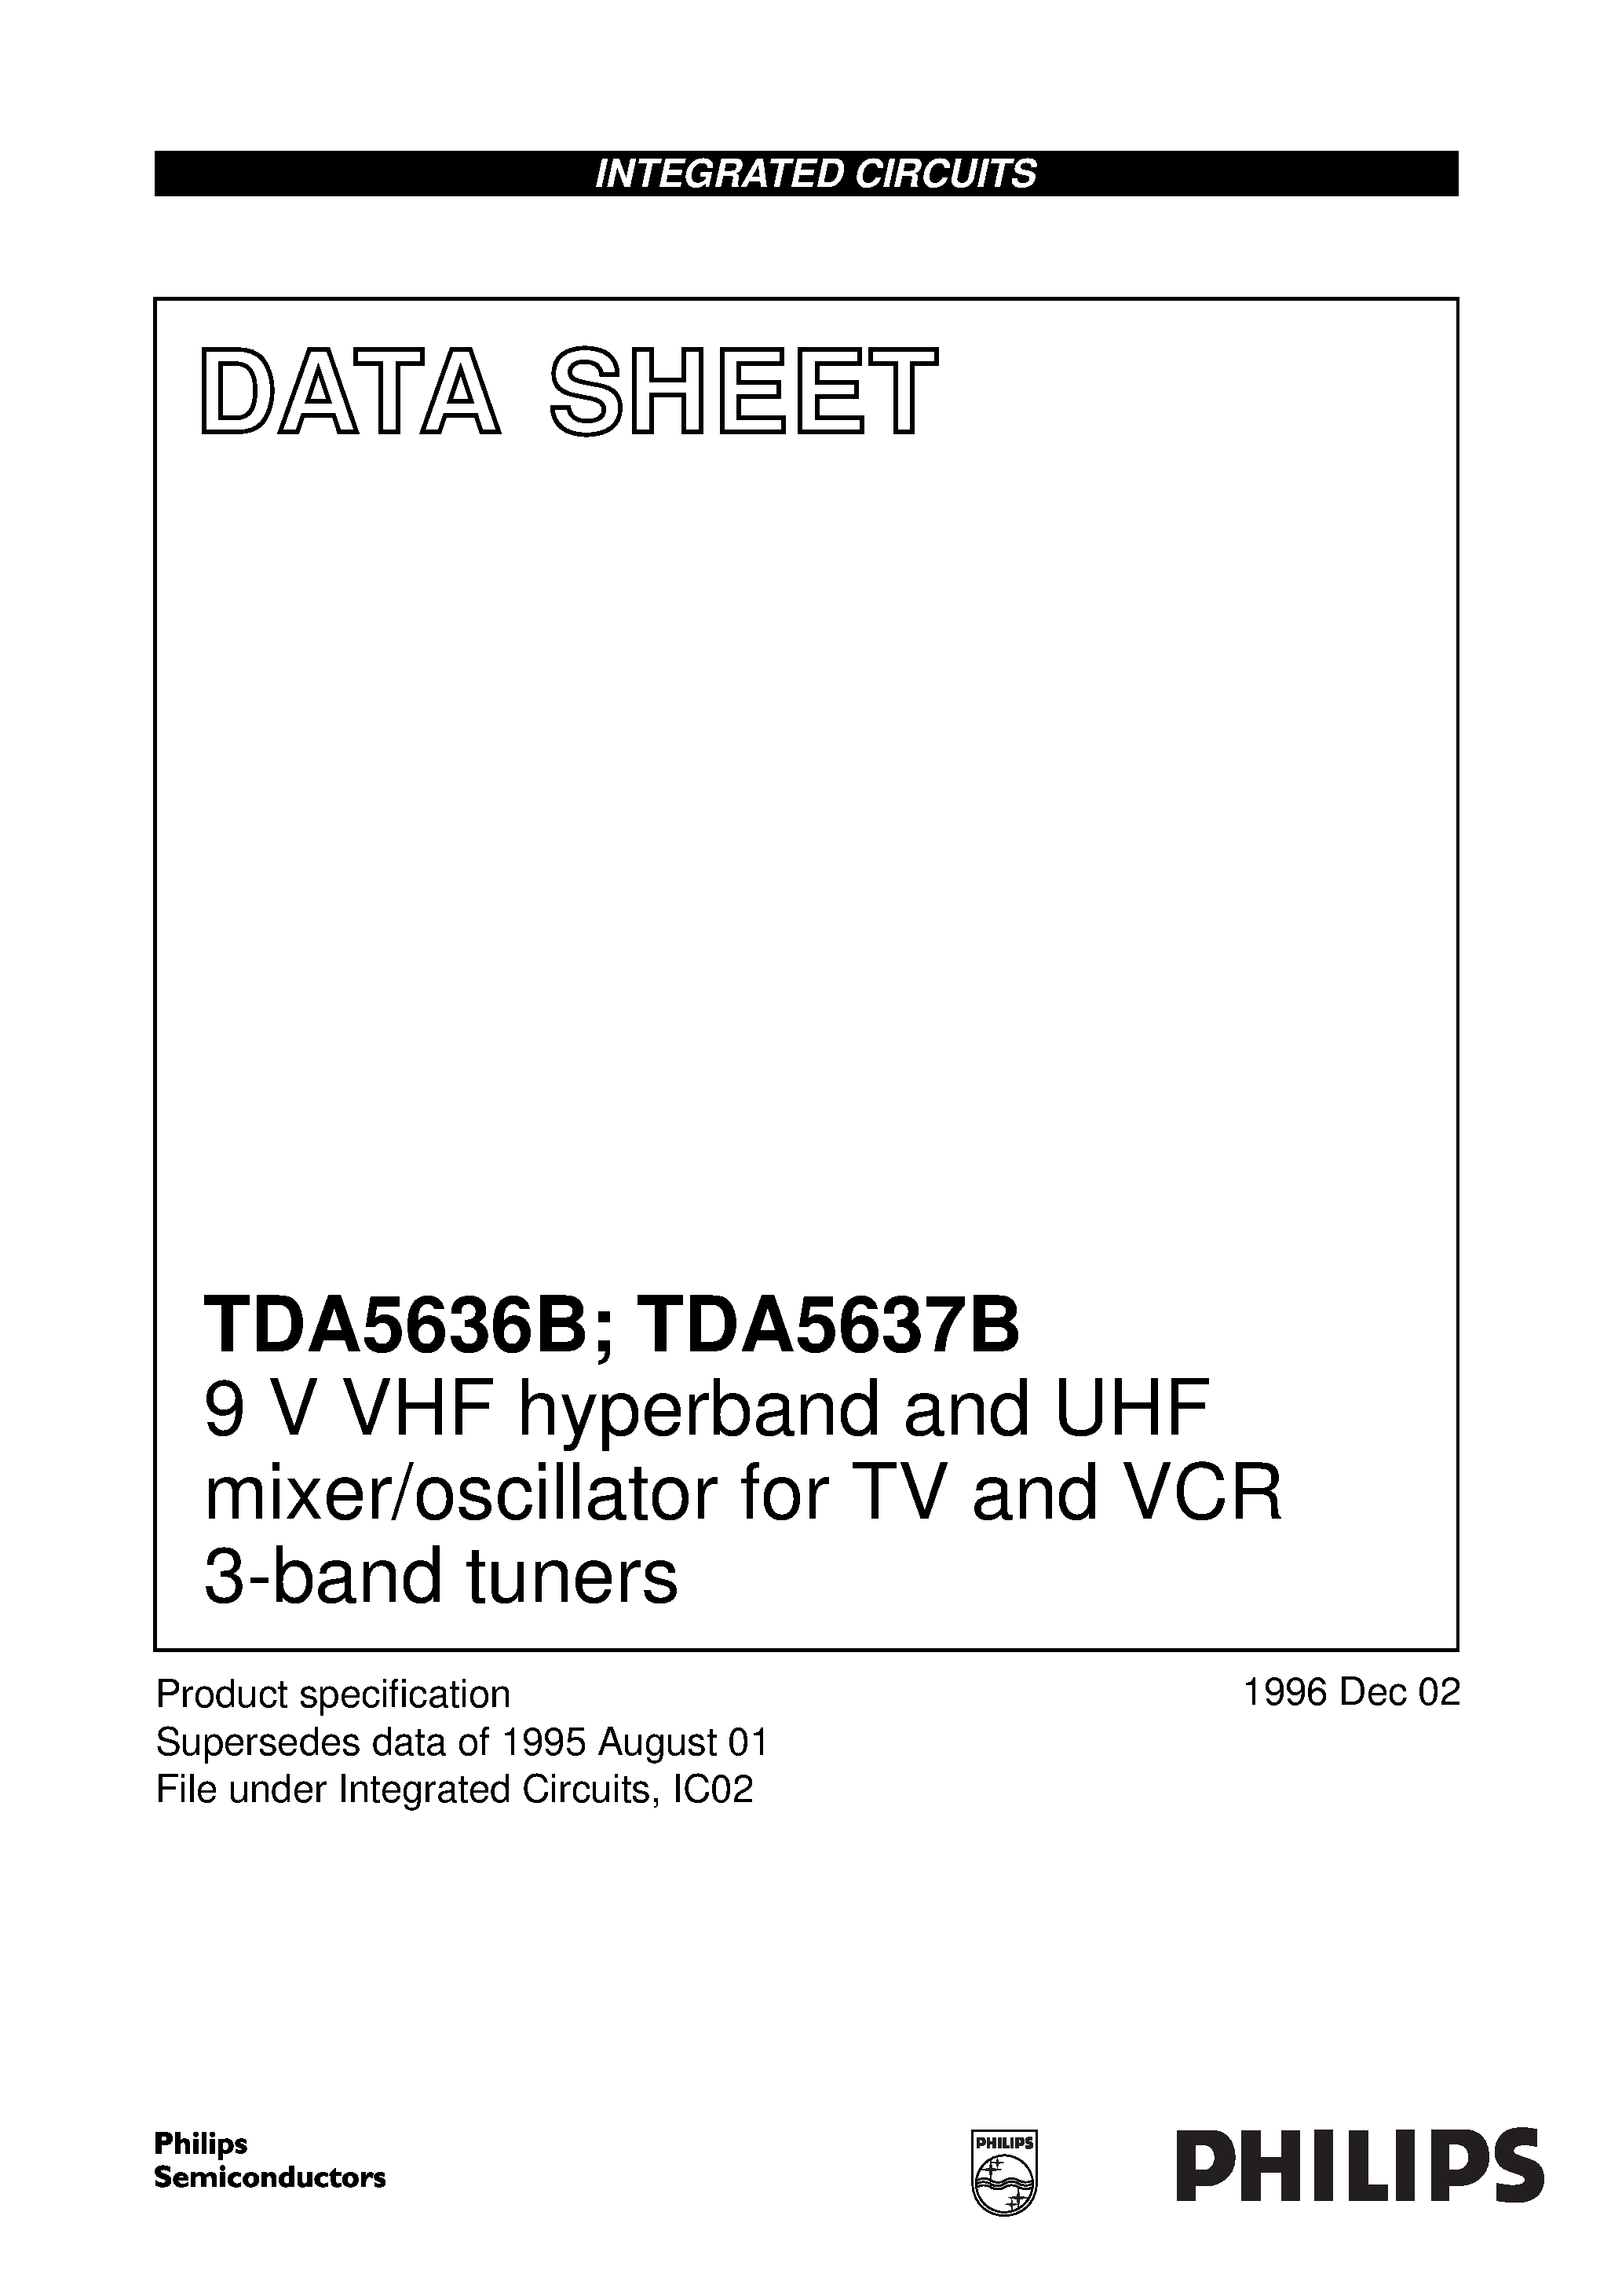 Datasheet TDA5637BM - 9 V VHF hyperband and UHF mixer/oscillator for TV and VCR 3-band tuners page 1